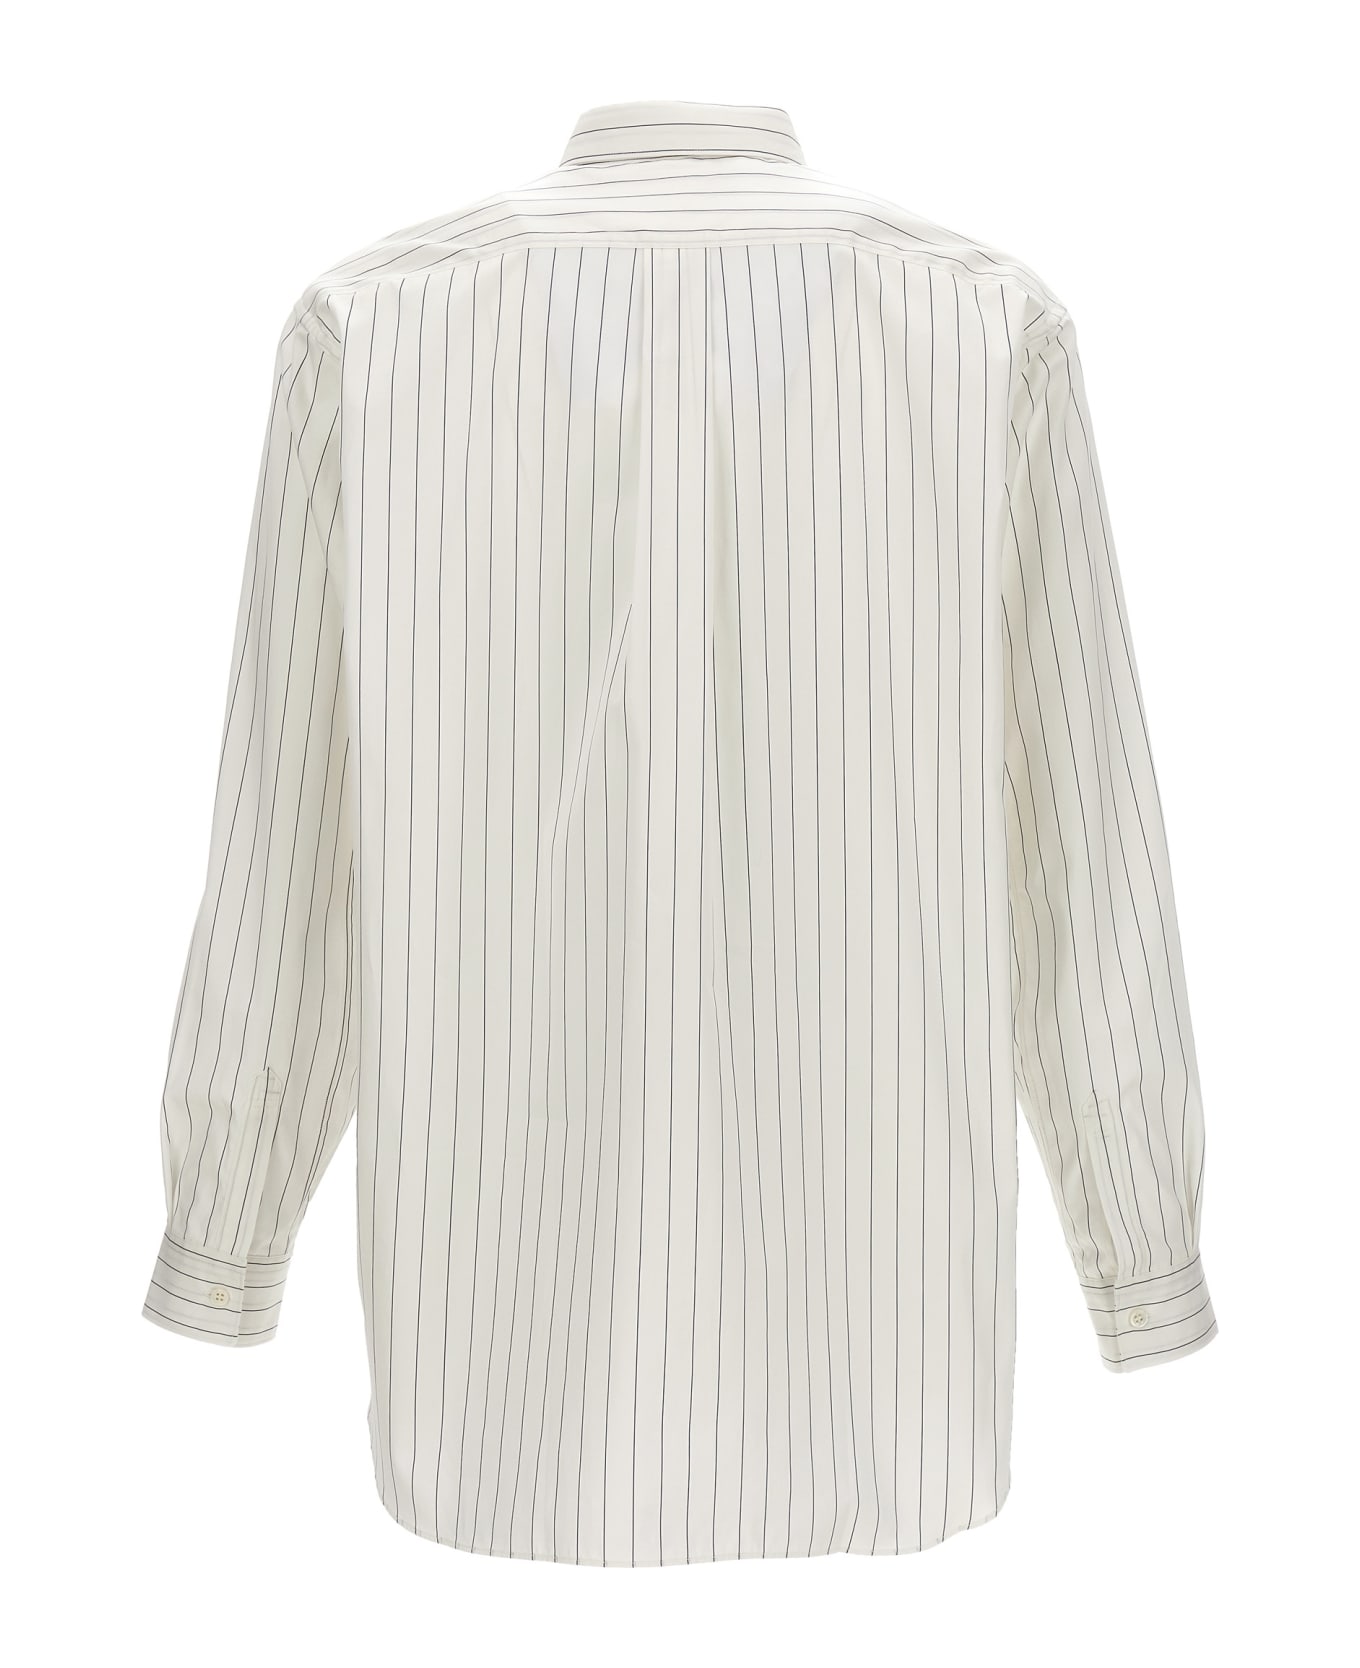 Comme des Garçons Shirt Striped Shirt - White/Black シャツ